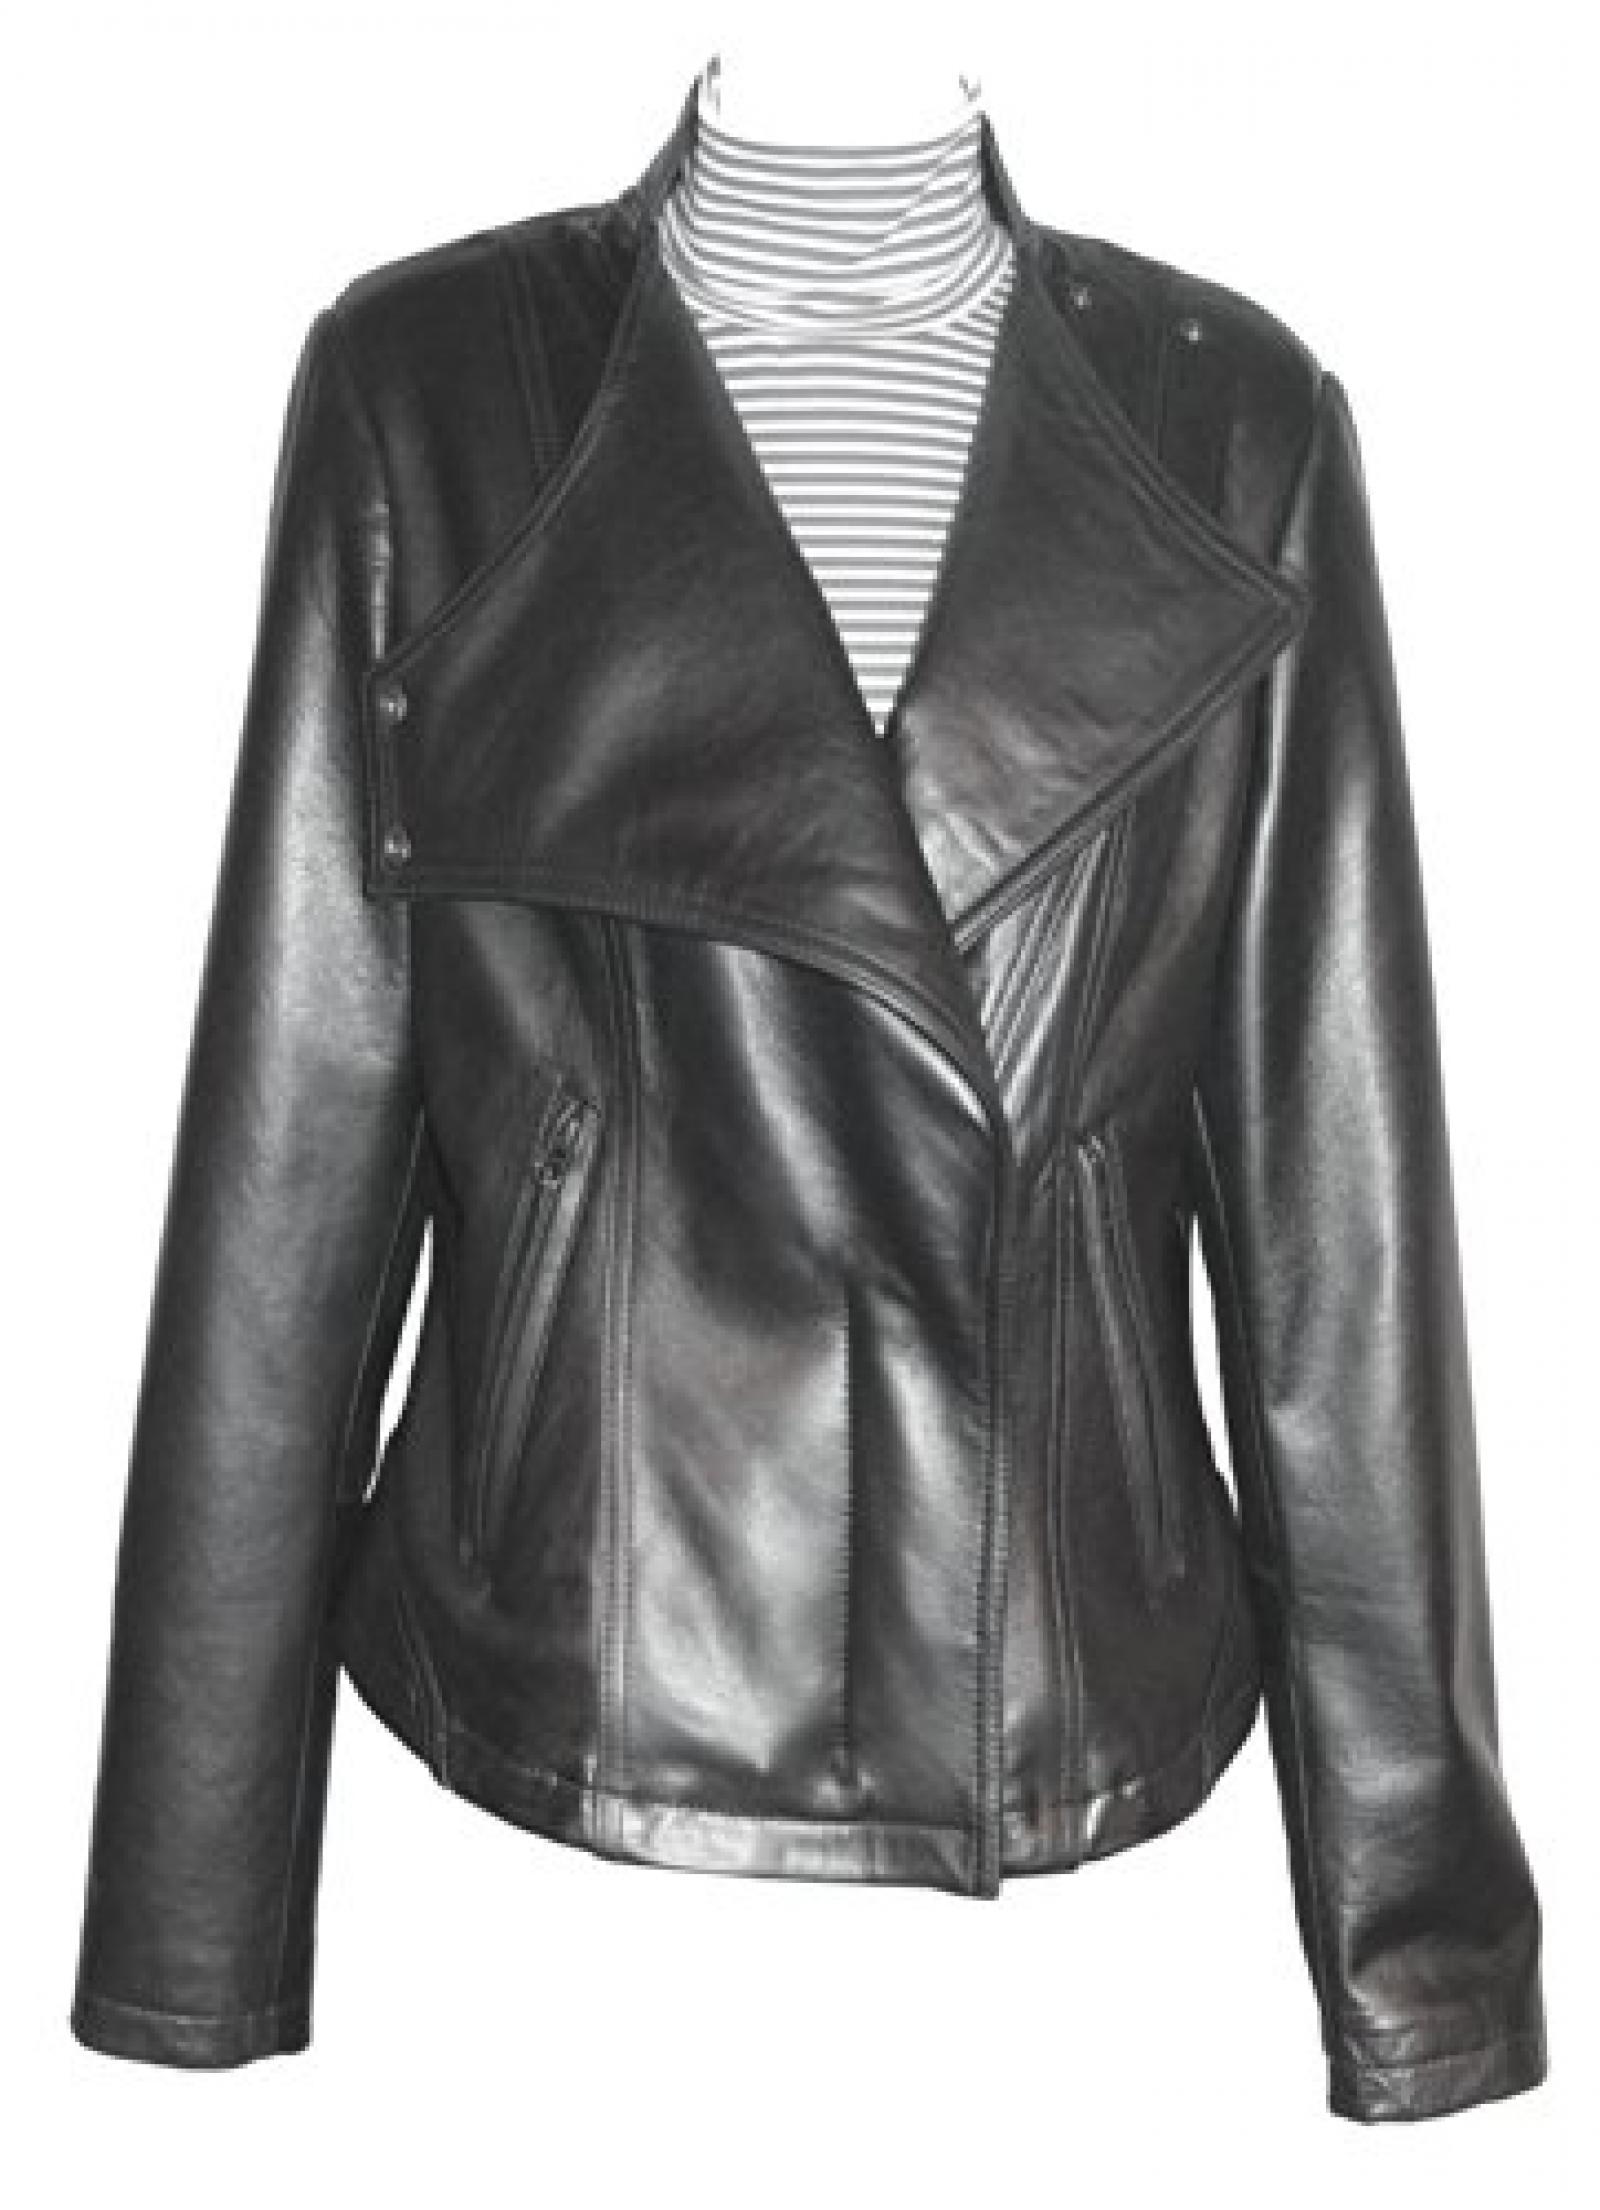 Nettailor FREE tailoring Women PETITE SZ 4093 Leather Moto Jacket Stand Collar 